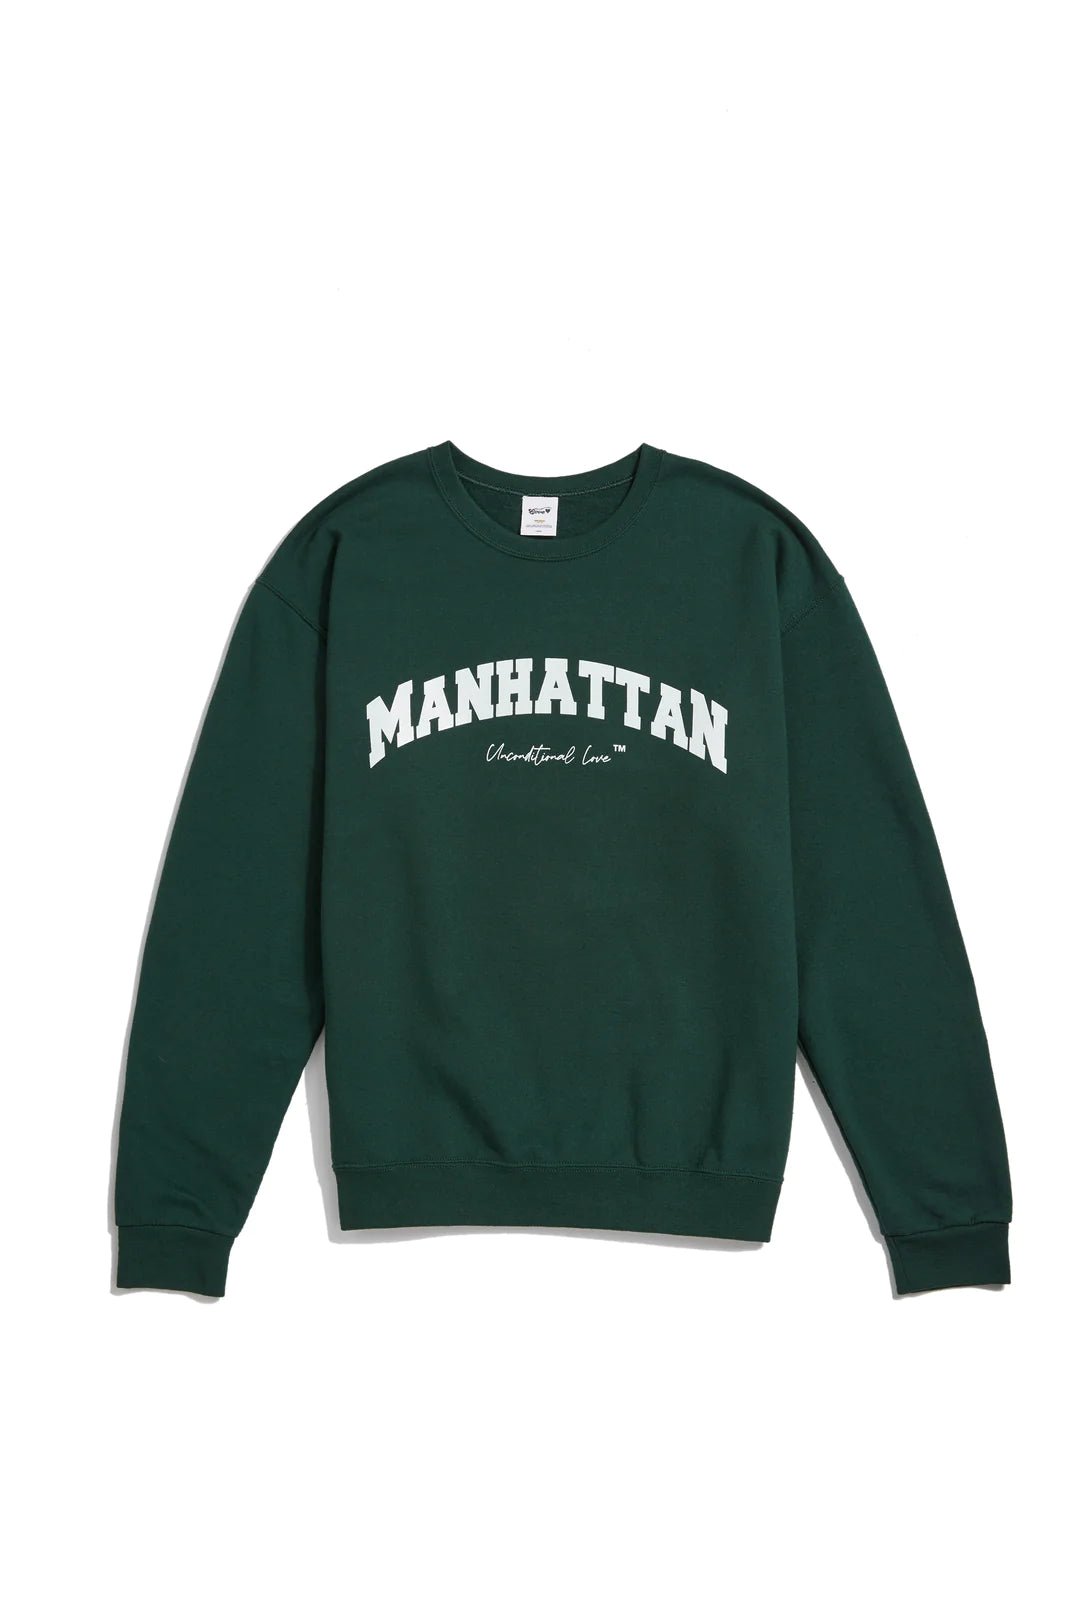 Manhattan Crew (green) - Something about Sofia